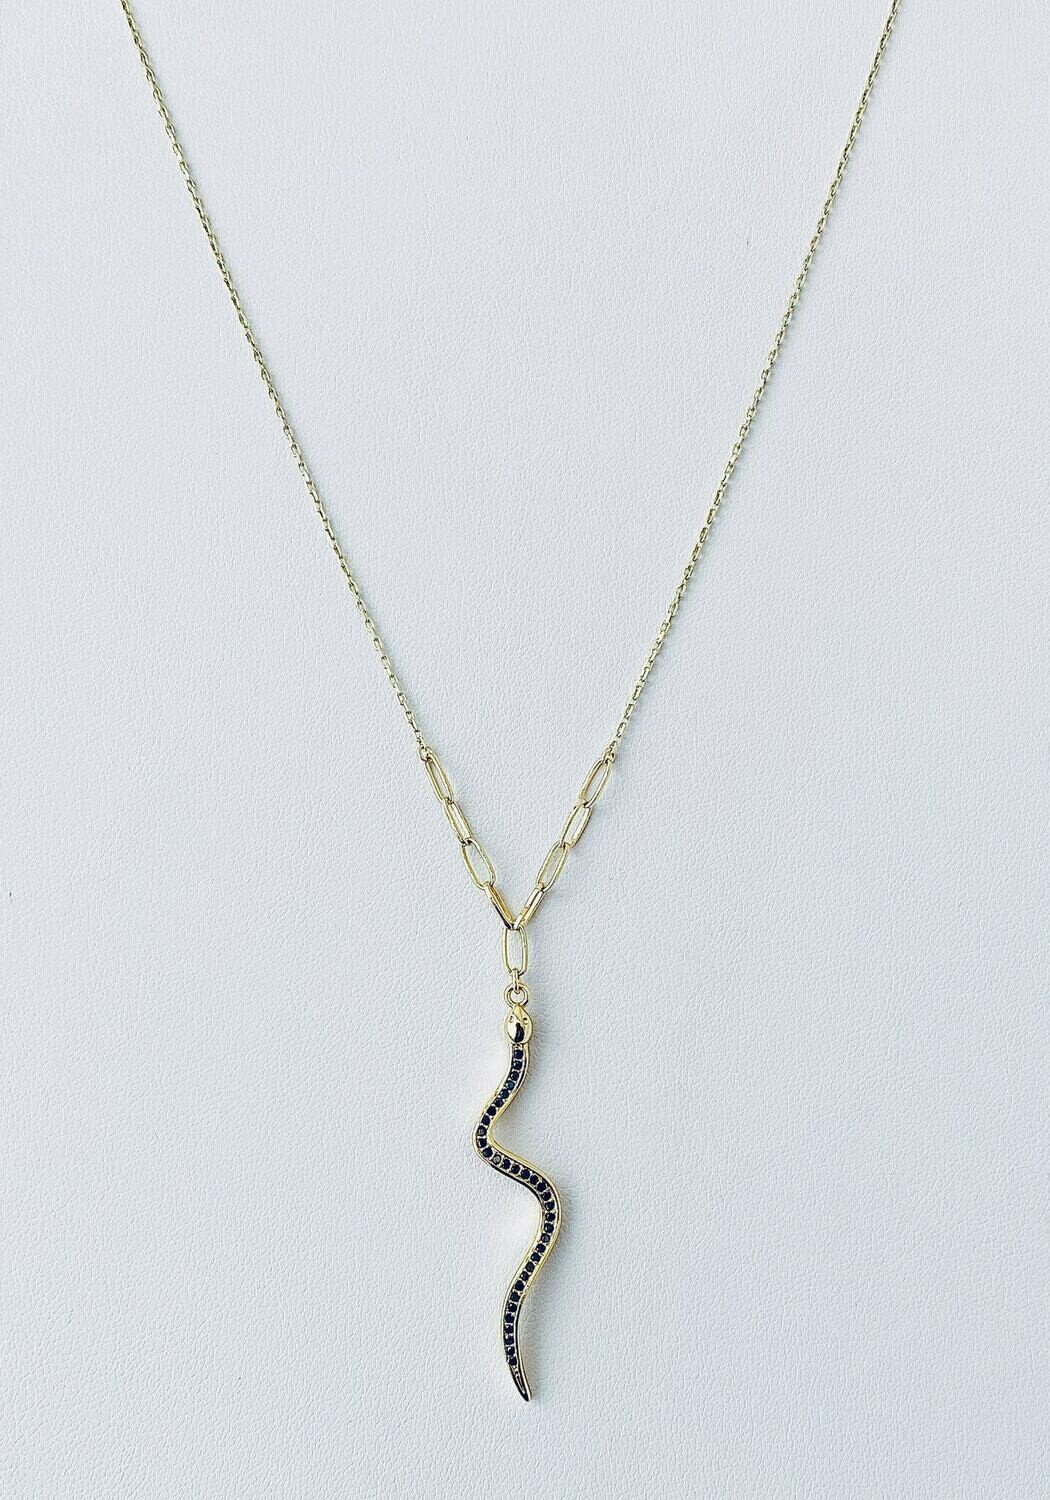 14k Gold Plate Sterling Silver Snake Necklace